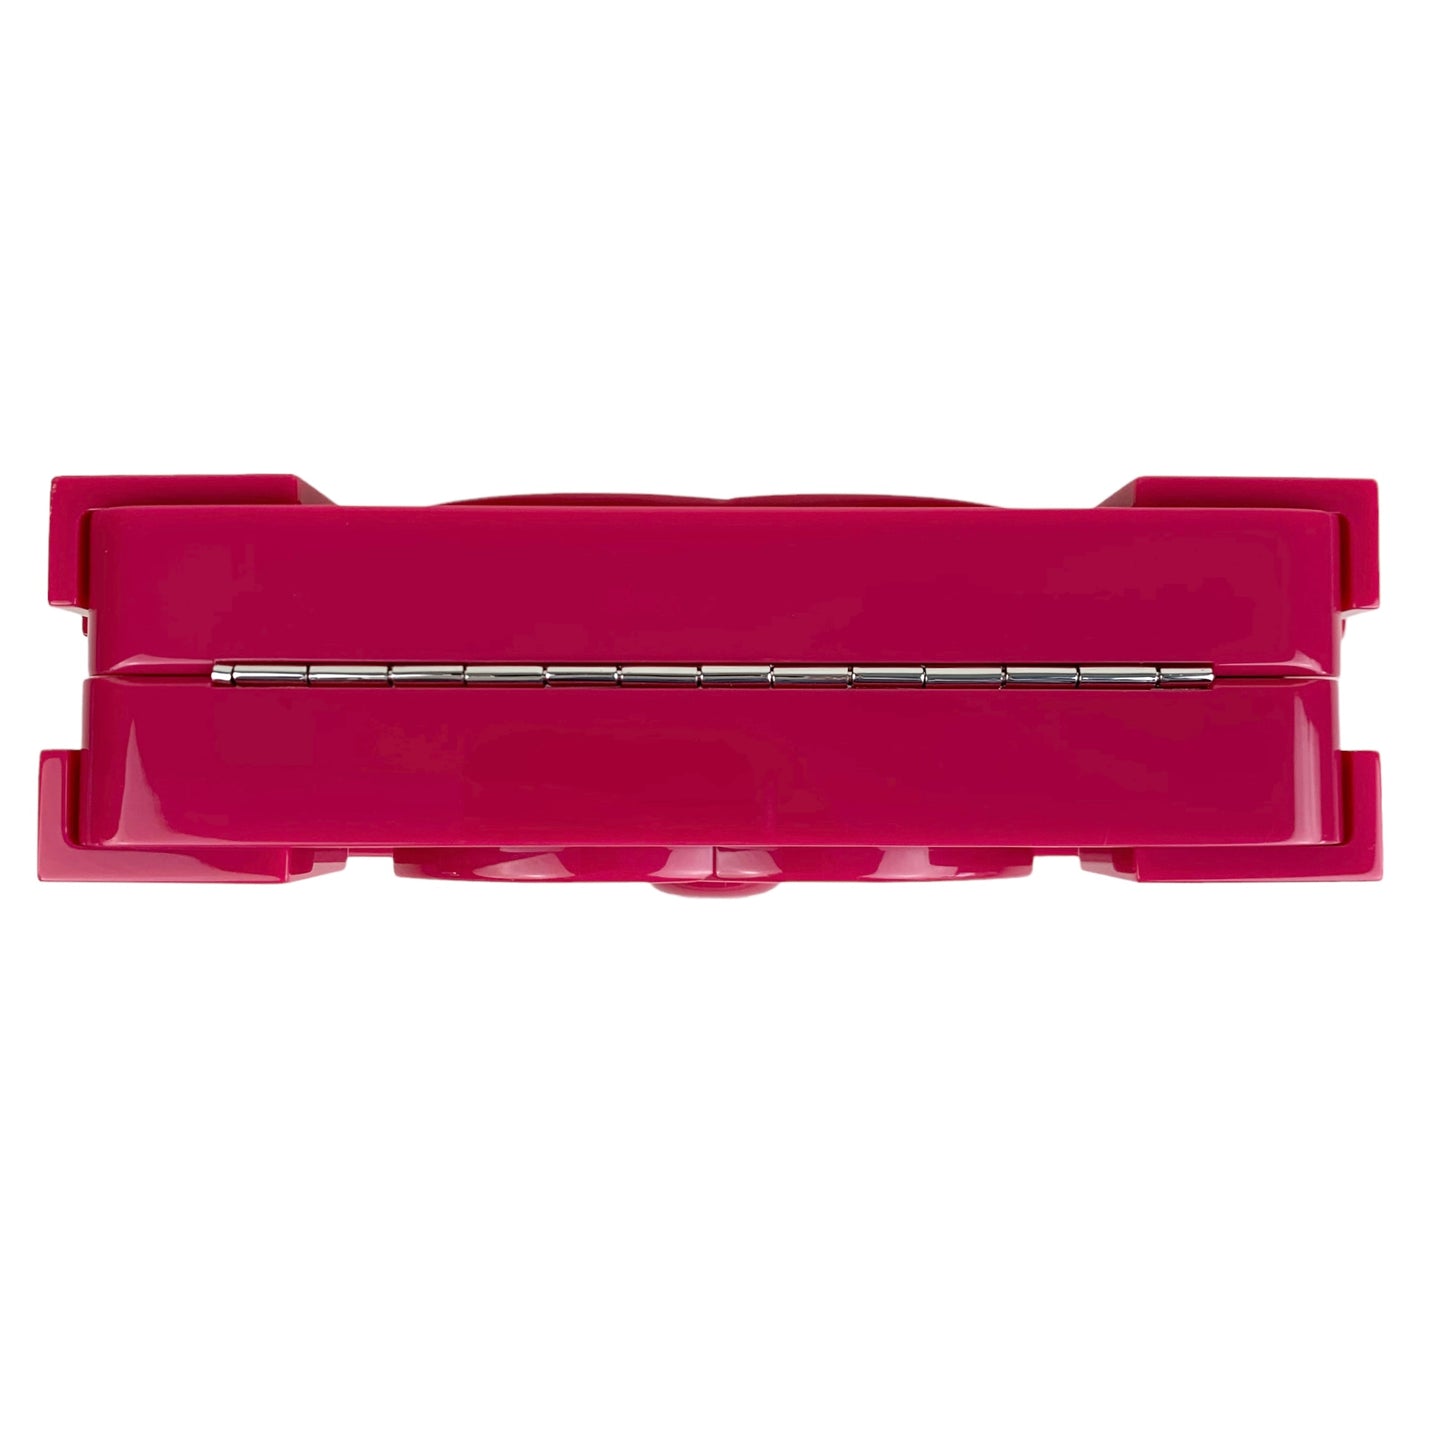 Chanel 2014 Pink Lego Brick Acrylic Minaudière Clutch Shoulder Bag